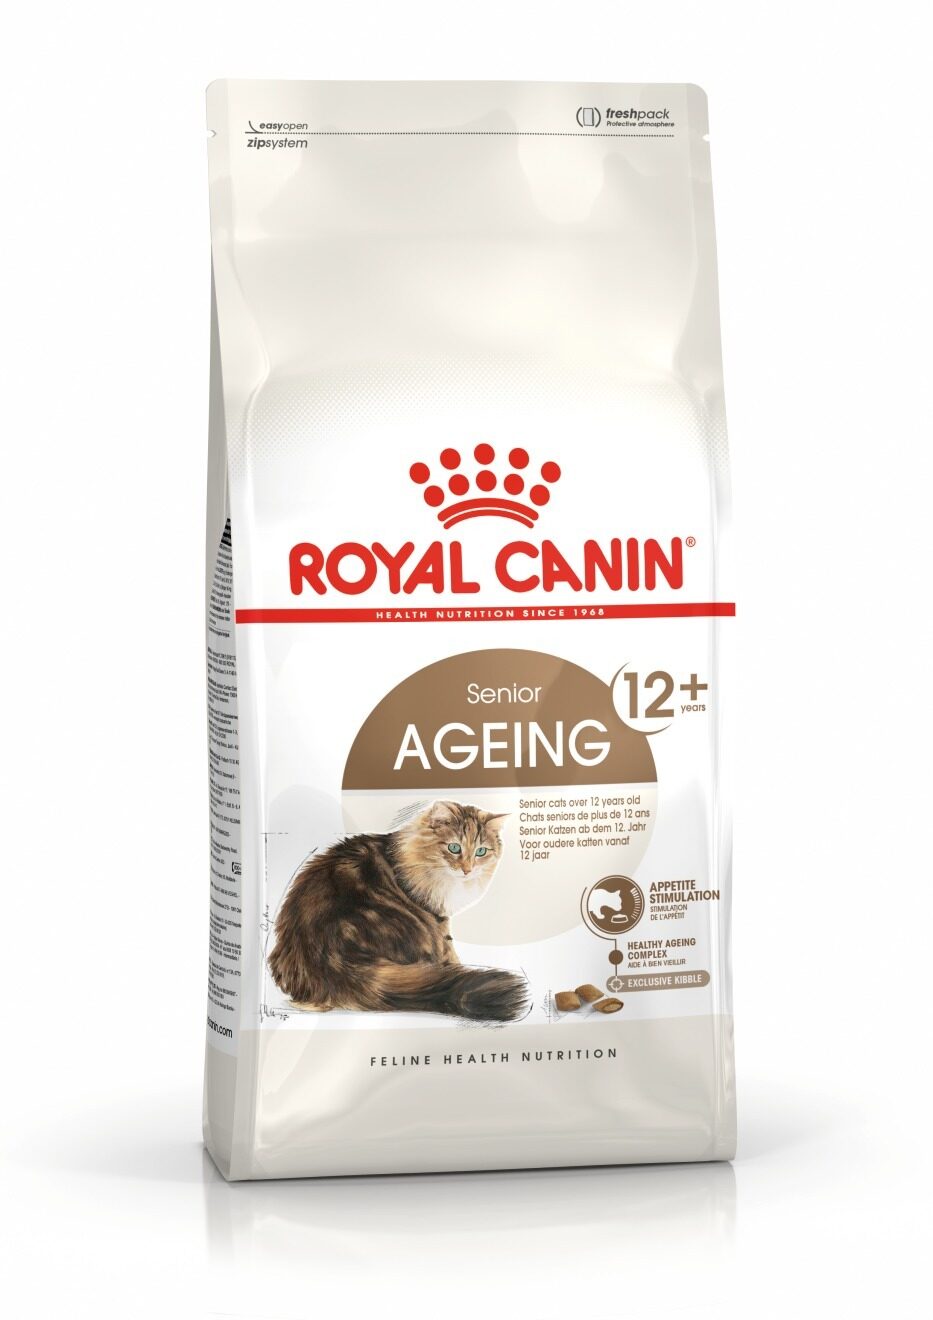 Royal Canin Ageing 12+, упаковка 2 кг